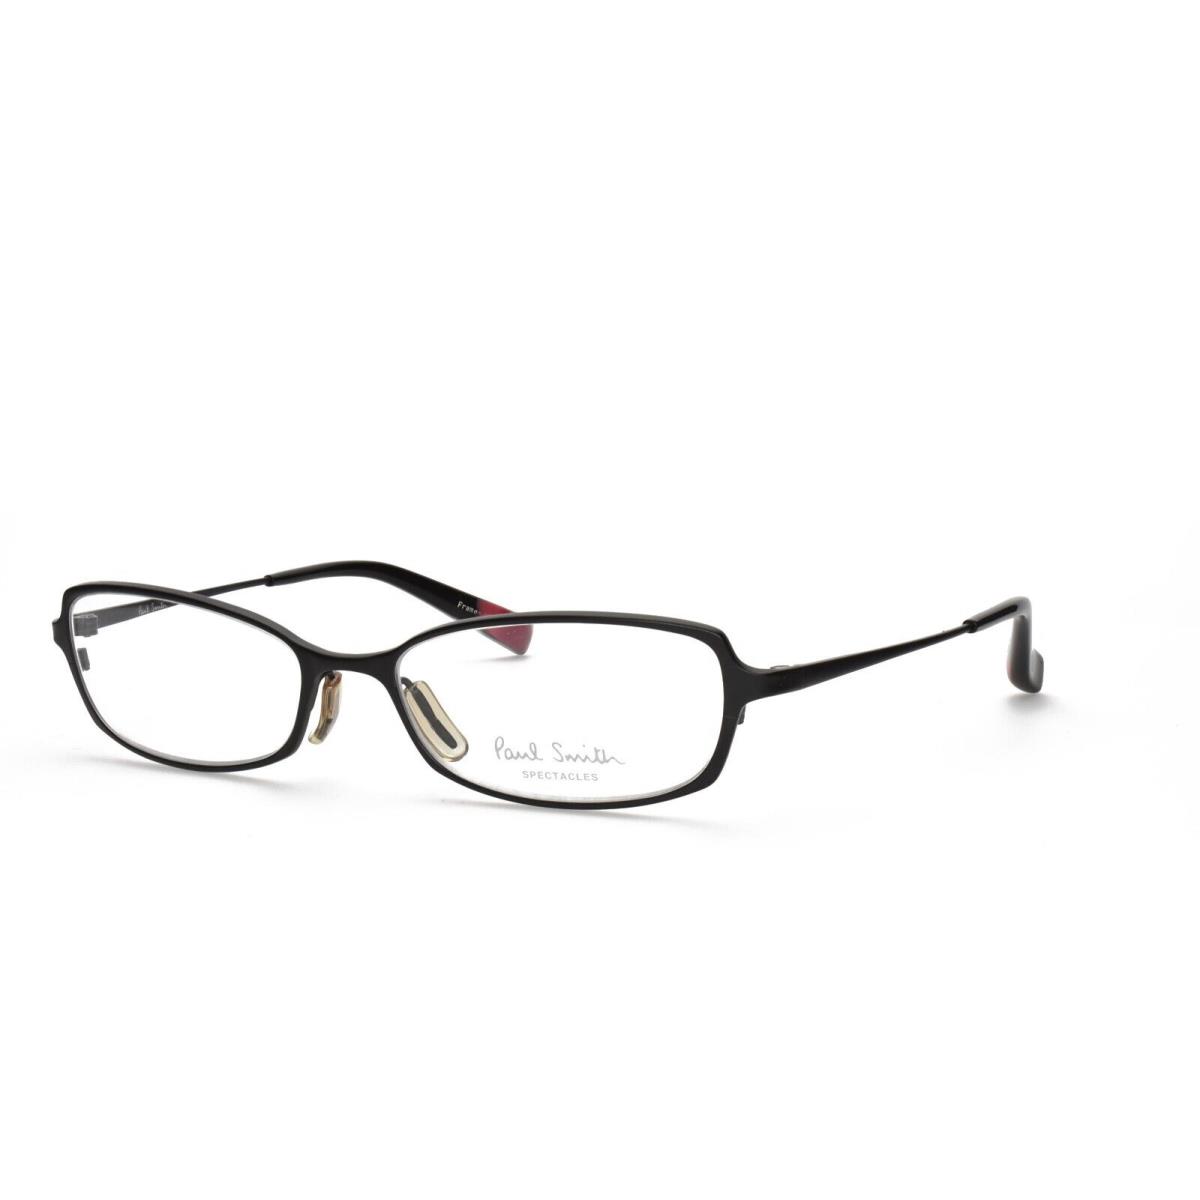 Paul Smith 188 Mox 51-16-130 Black Vtg Vintage Eyeglasses Frames Titanium